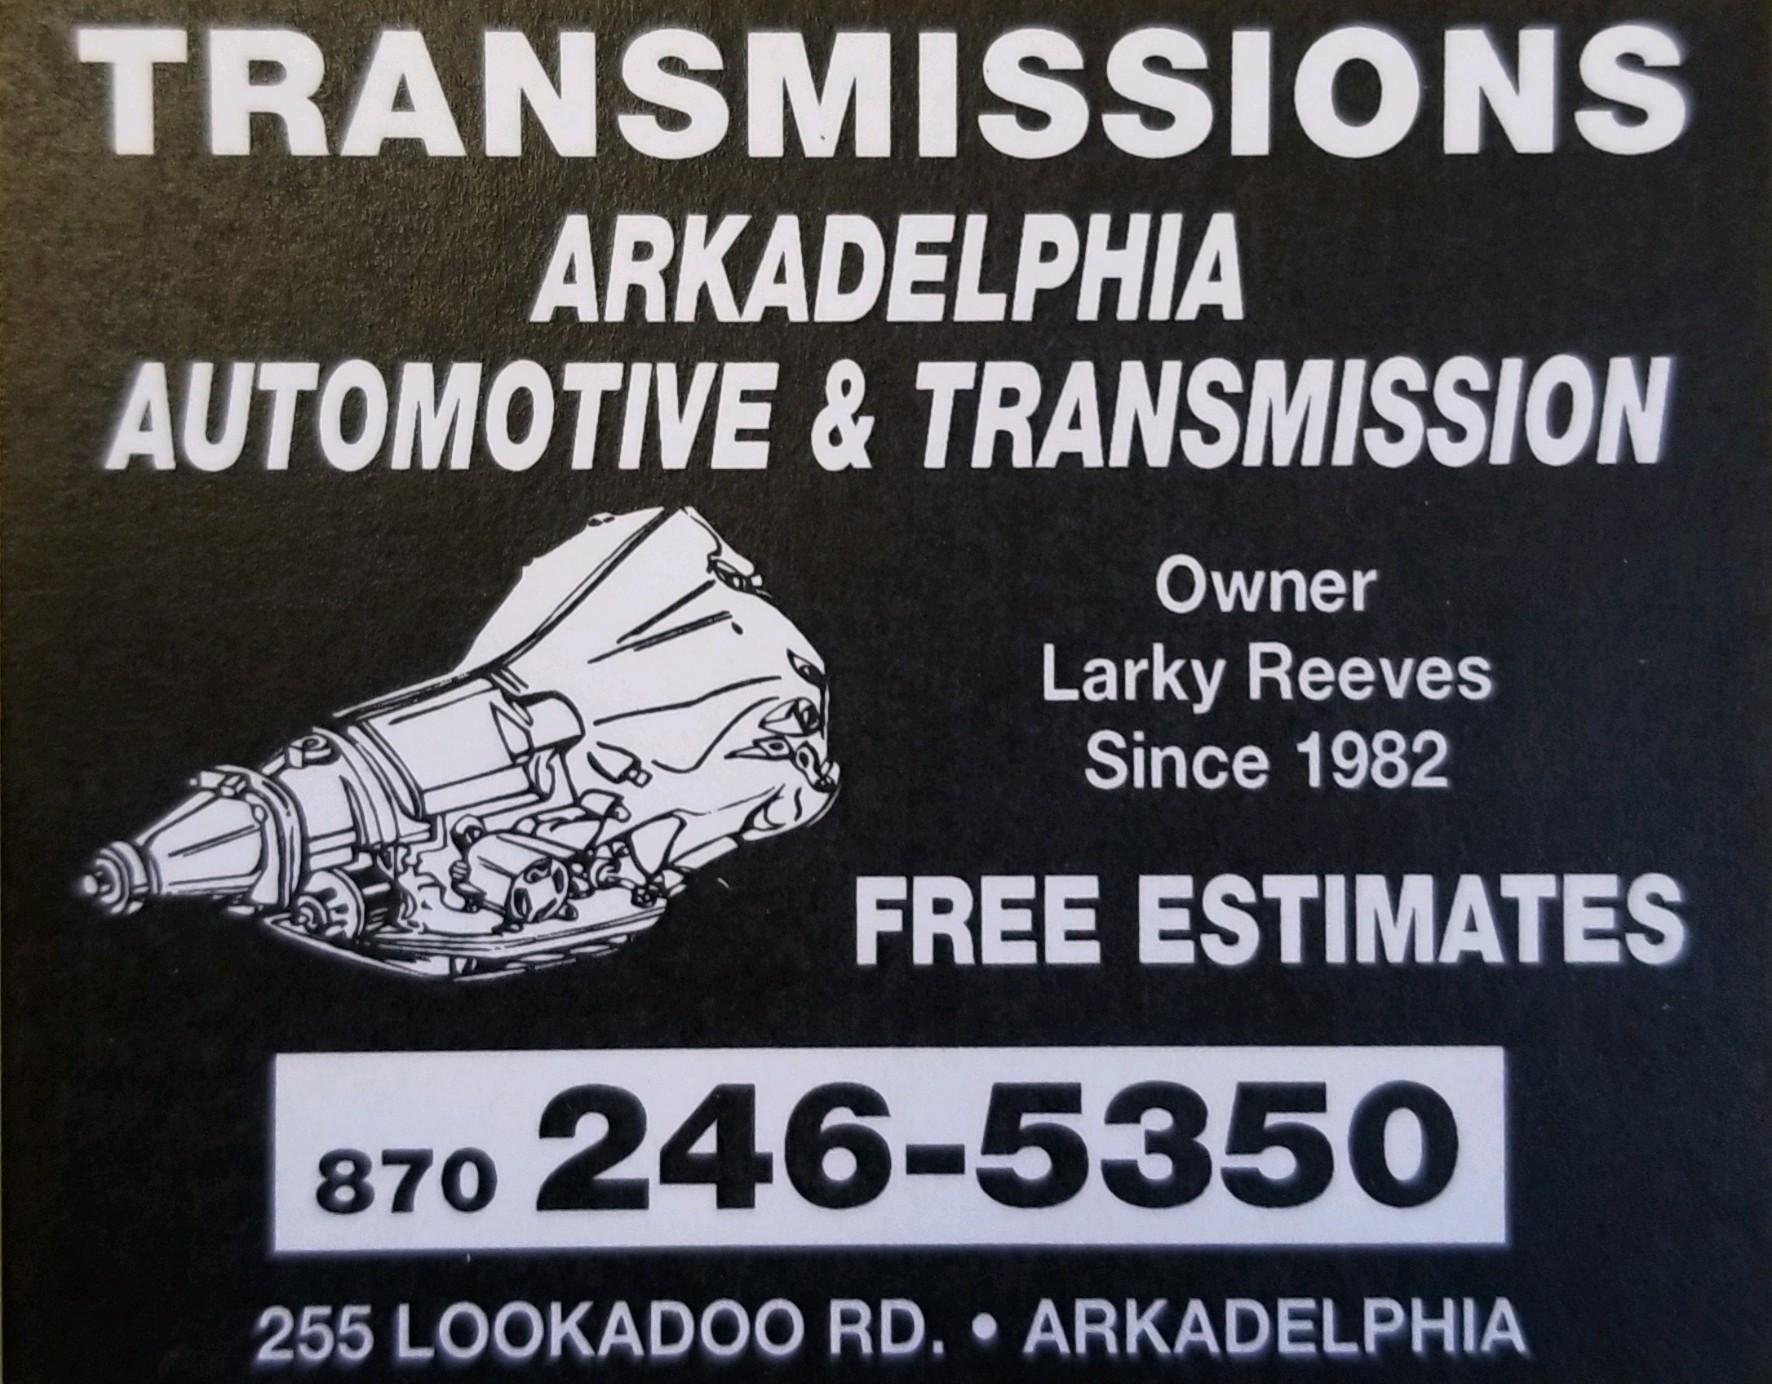 Arkadelphia Automotive & Transmission